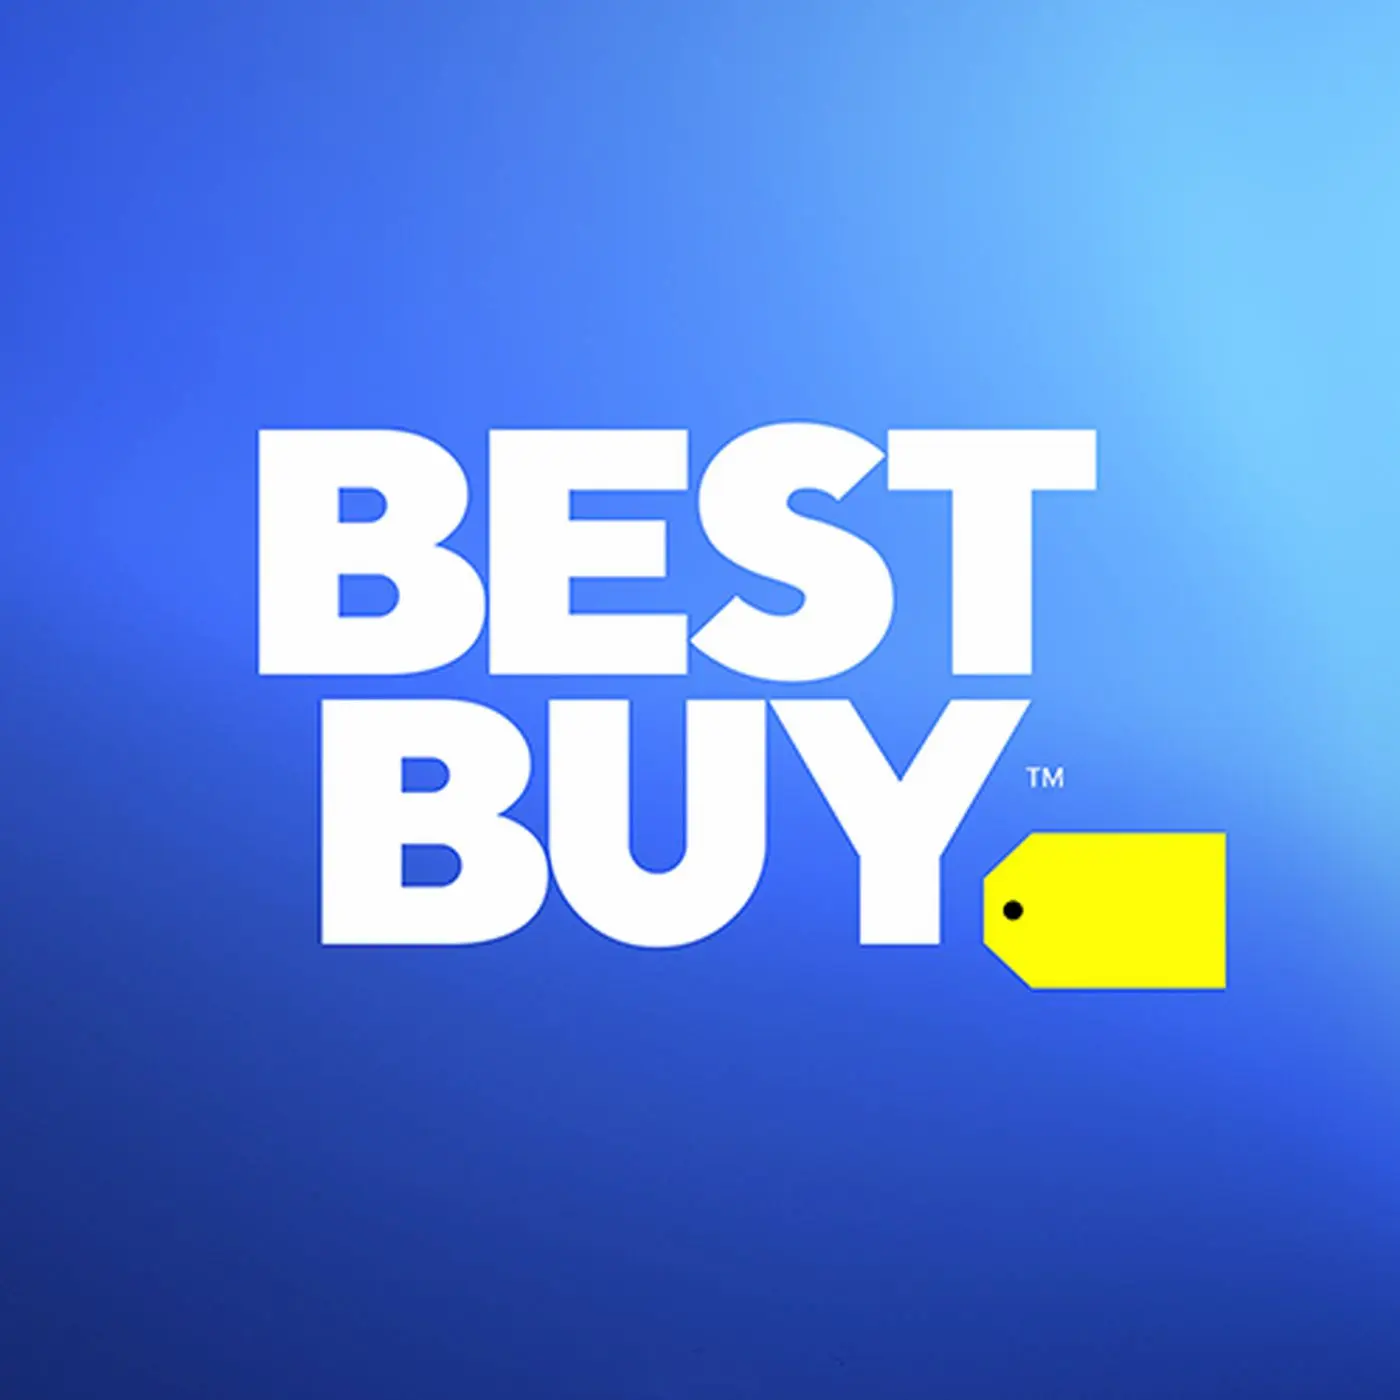 Samsung Galaxy S23 - أفضل عرض إطلاق الشراء